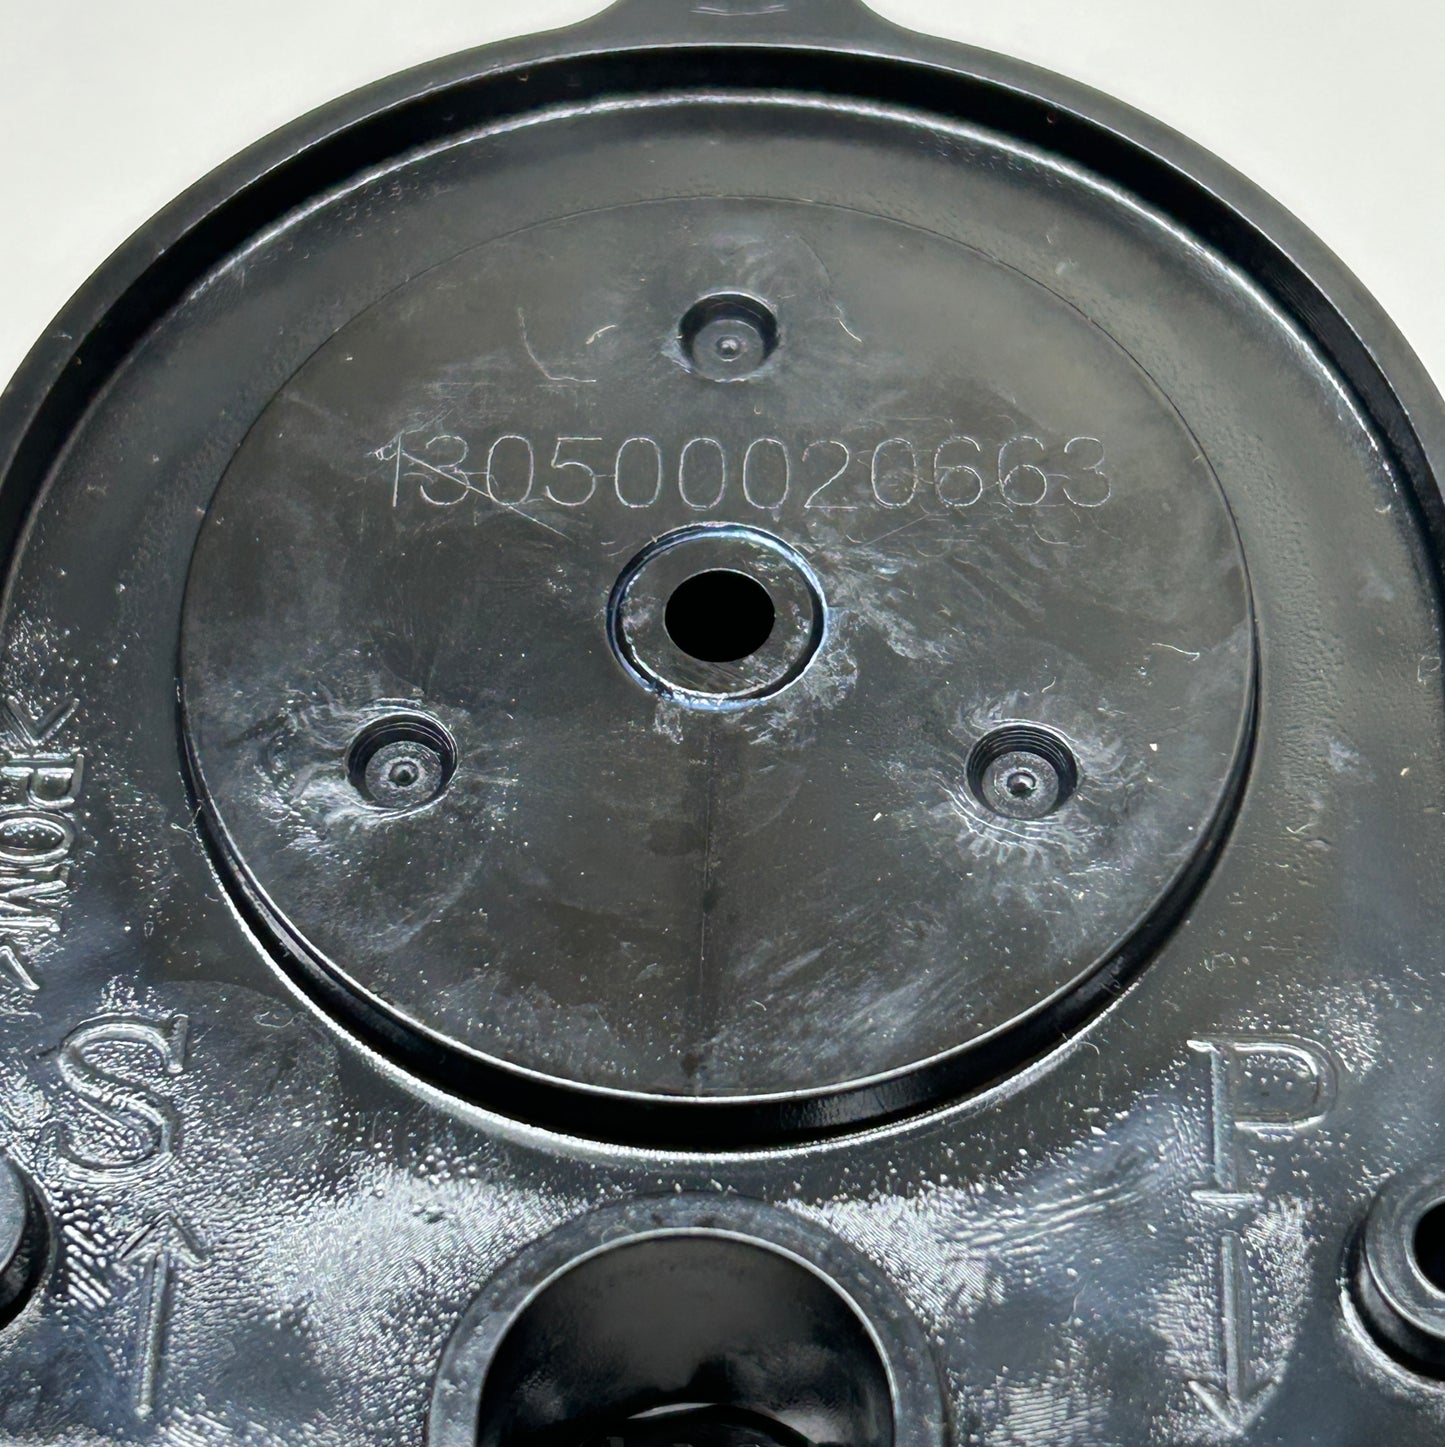 ROLAND ASSY Pump Sub XC-540 6700319010 (New)